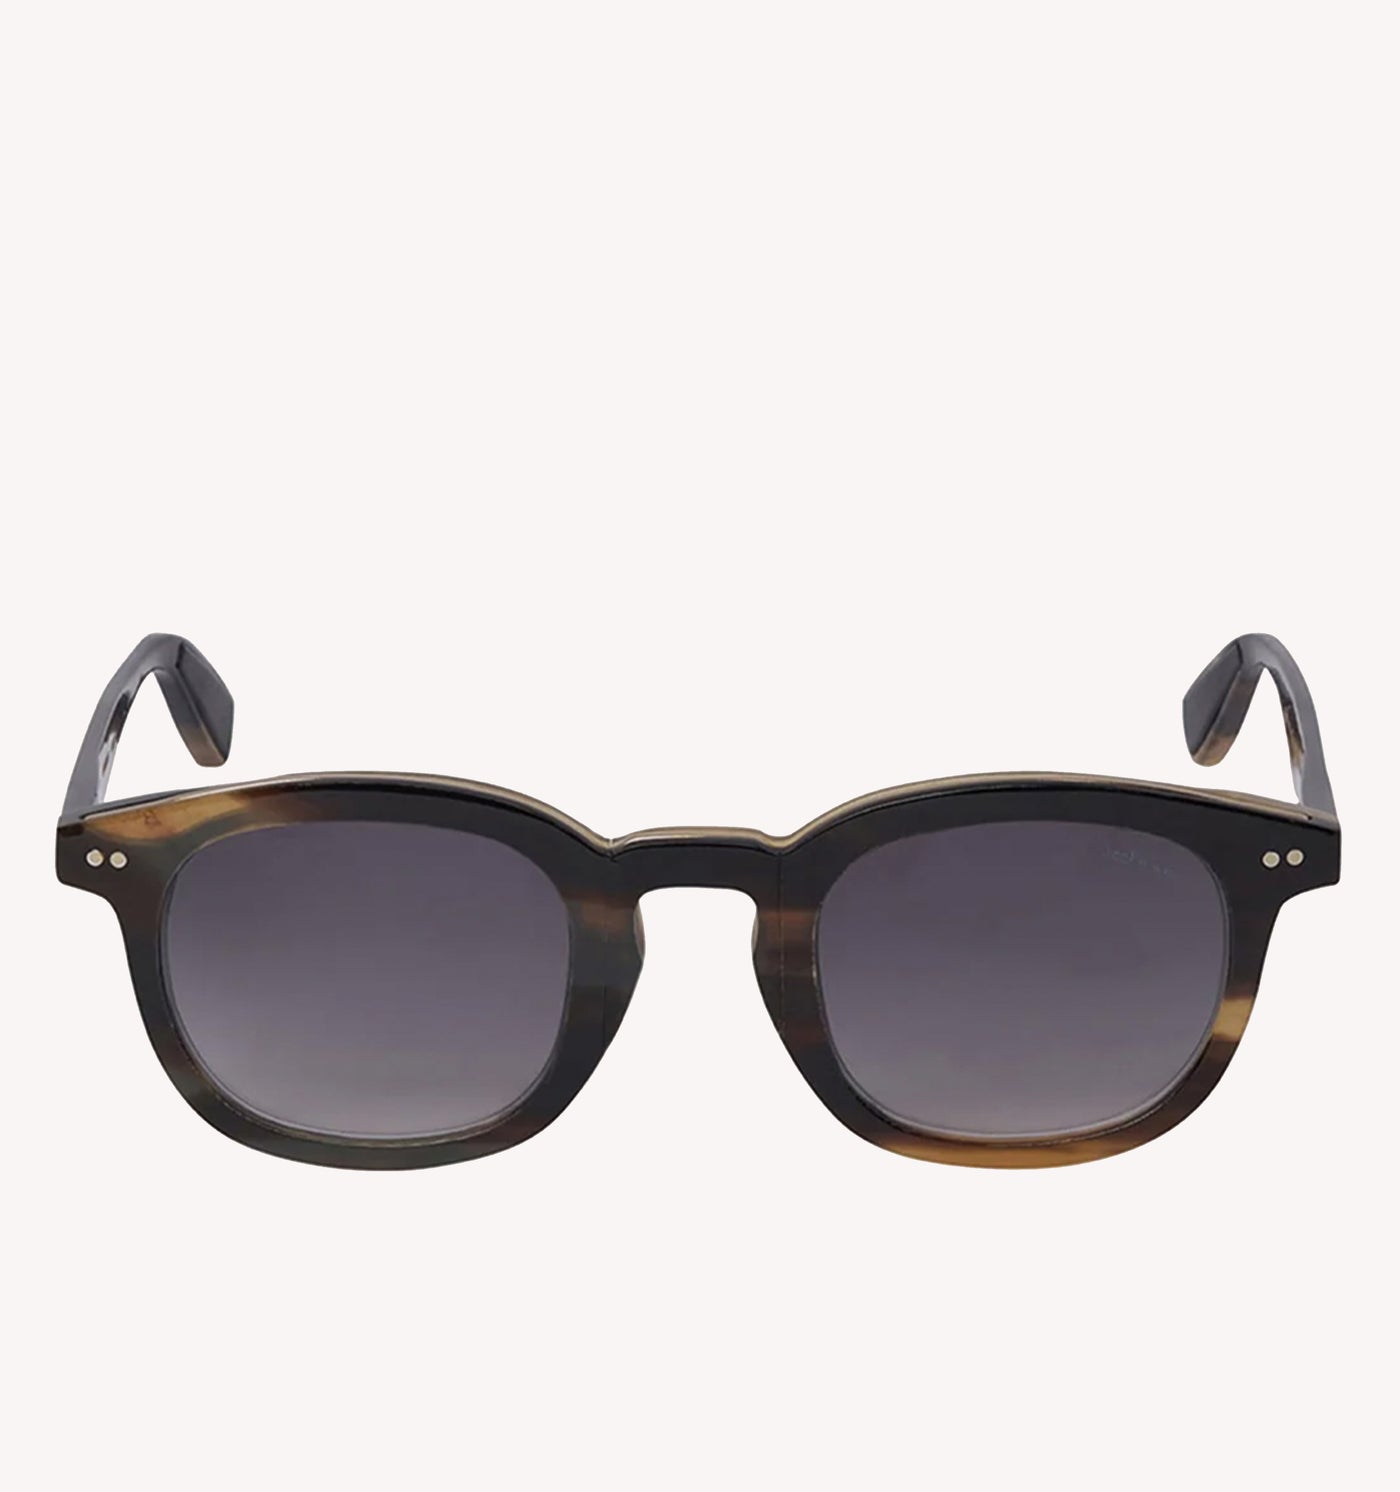 Kiton Pathos Sunglasses in Brown